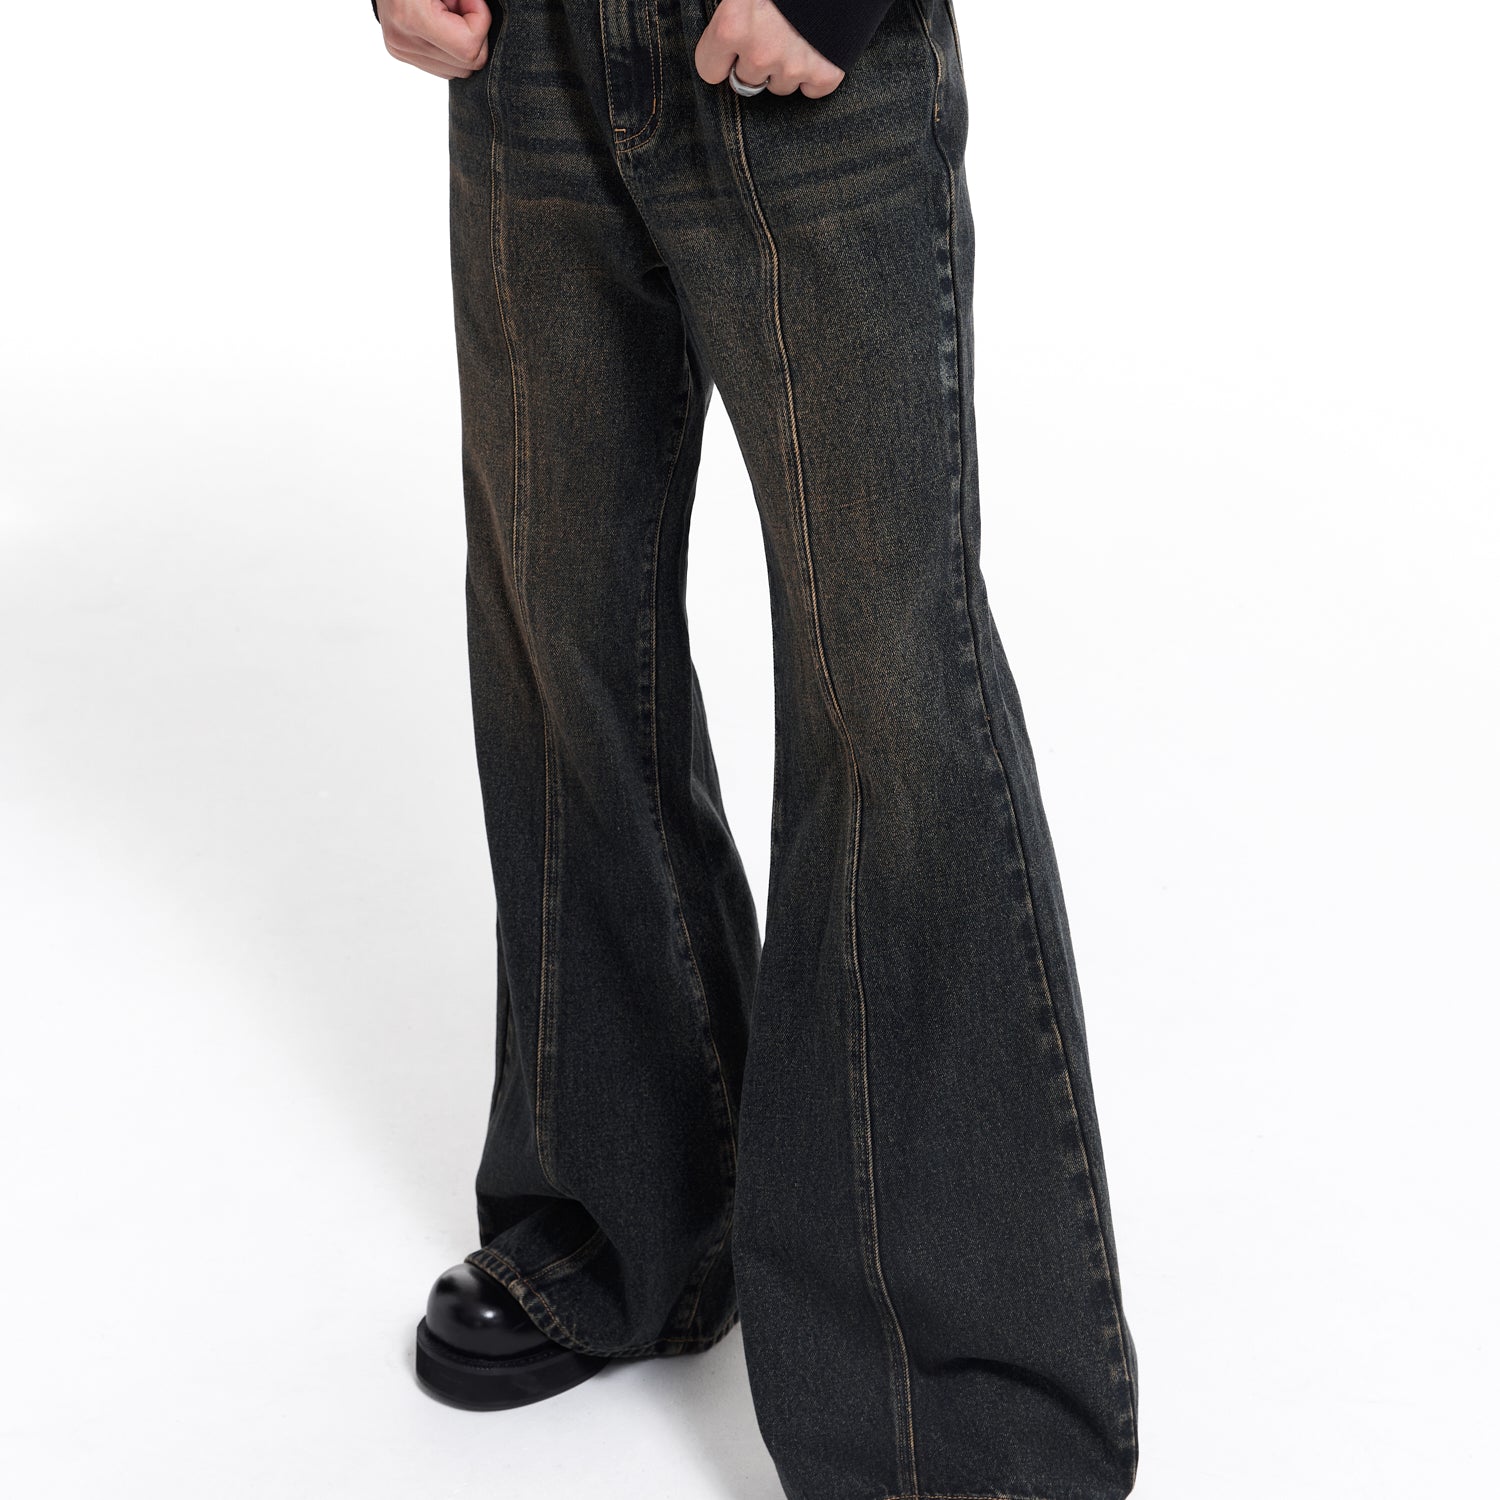 Retro Rust-Colored Loose Fit Jeans - Unisex